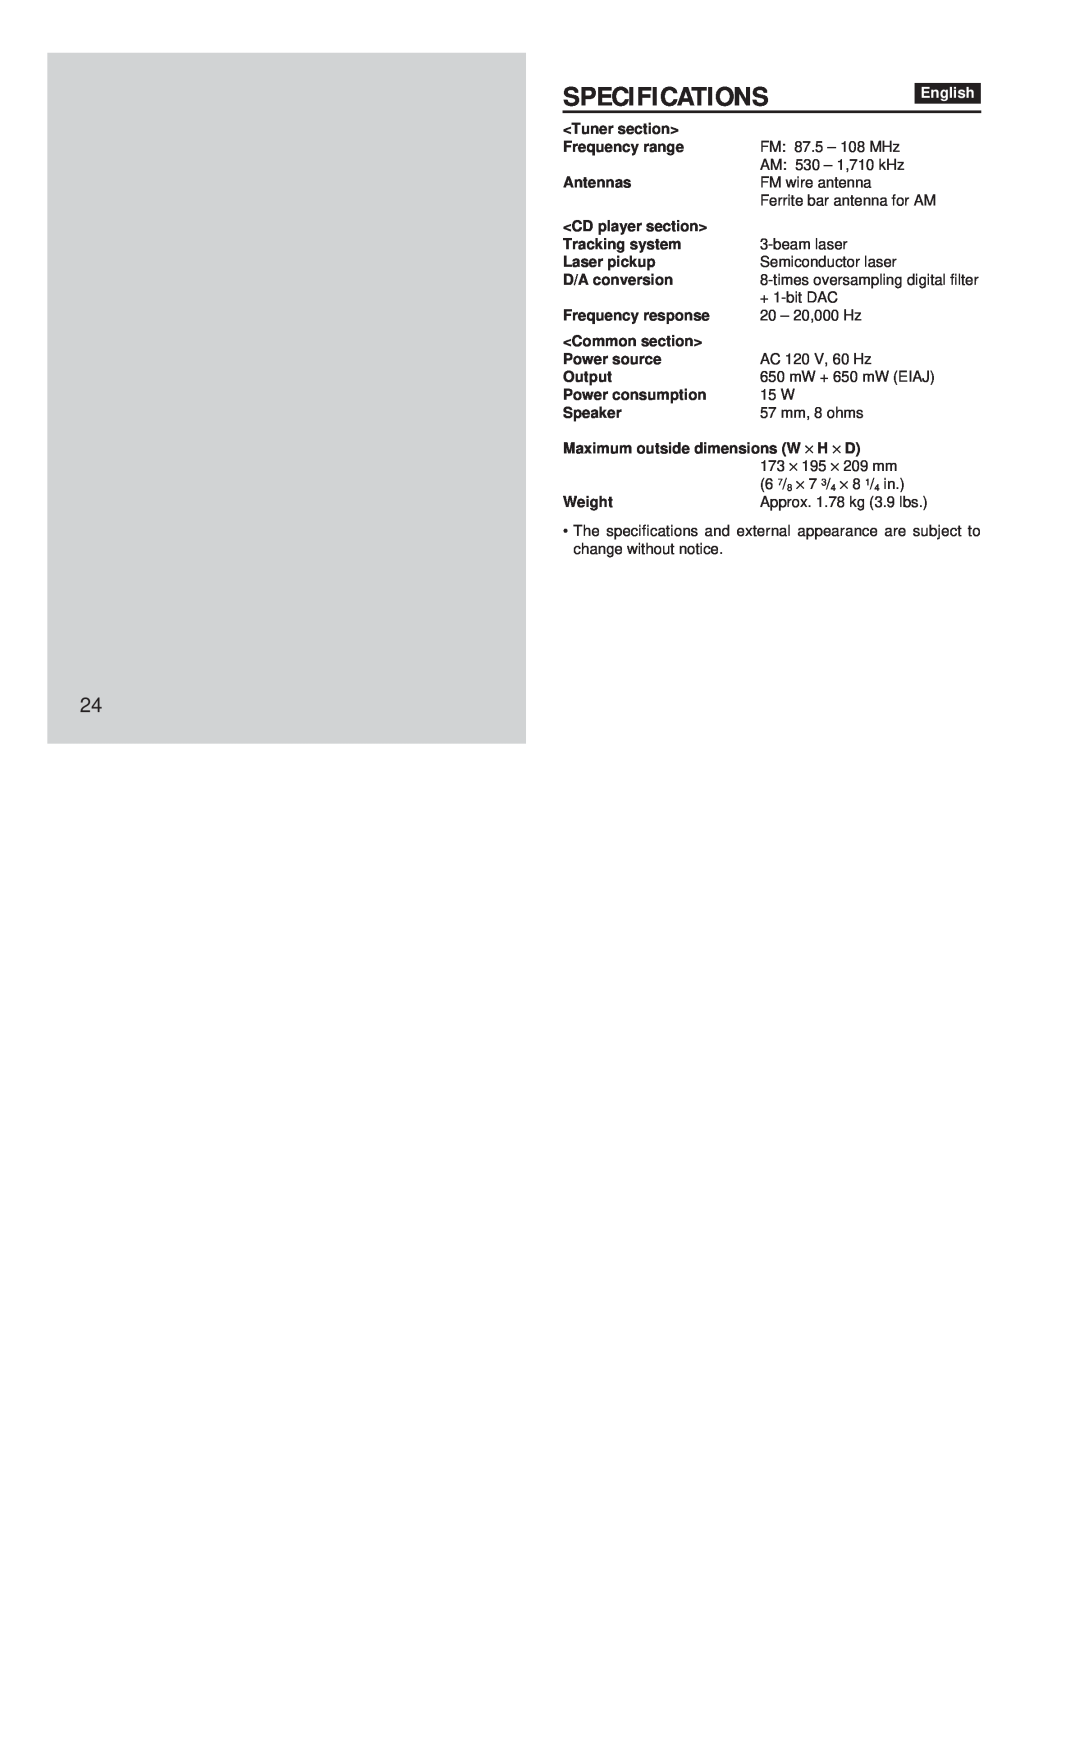 Aiwa FR-CD1500 manual Specifications, English 